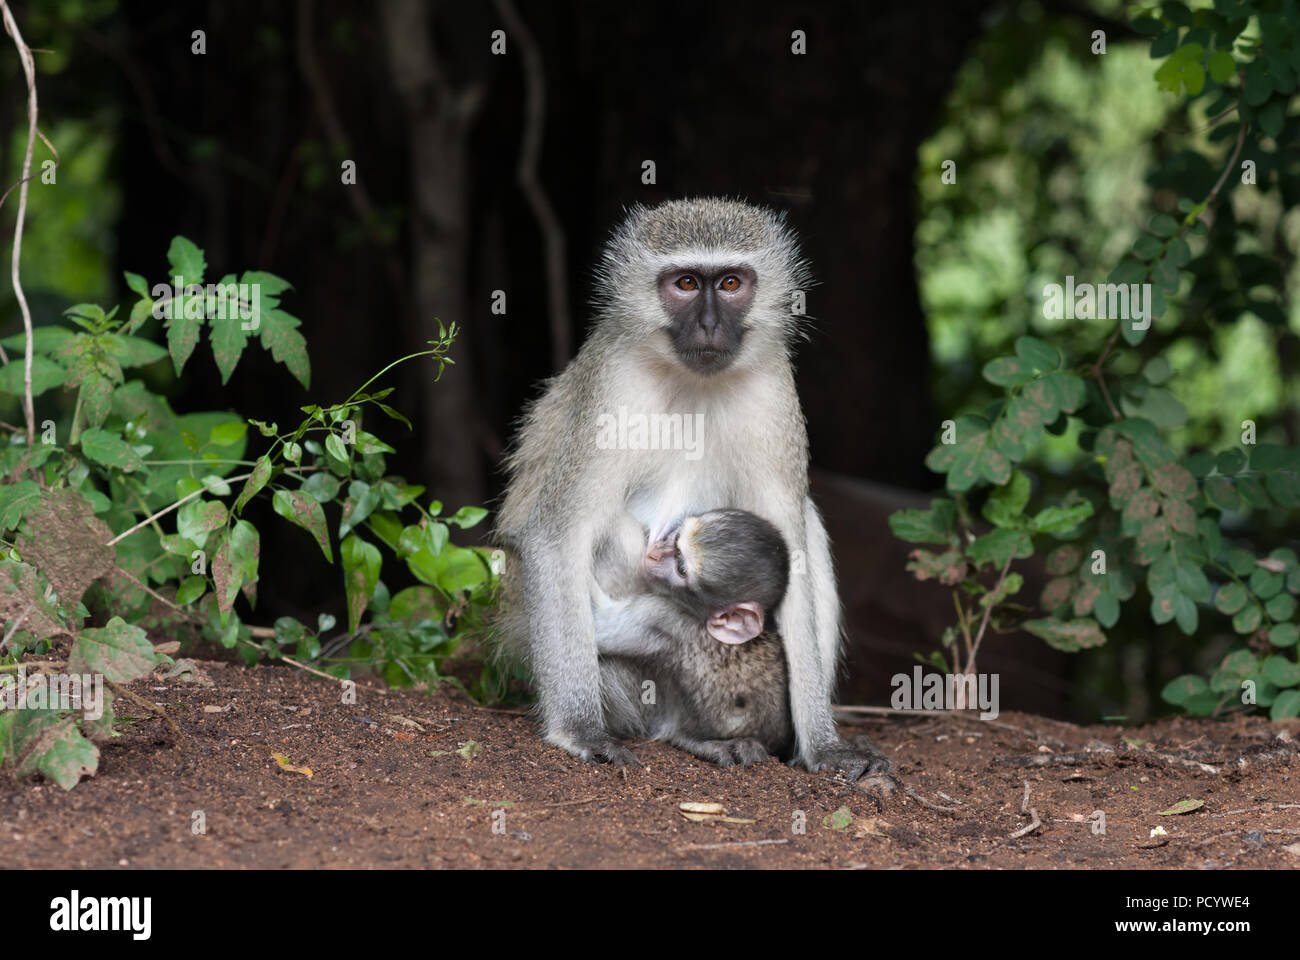 Mono plateado fotografías e imágenes de alta resolución - Alamy